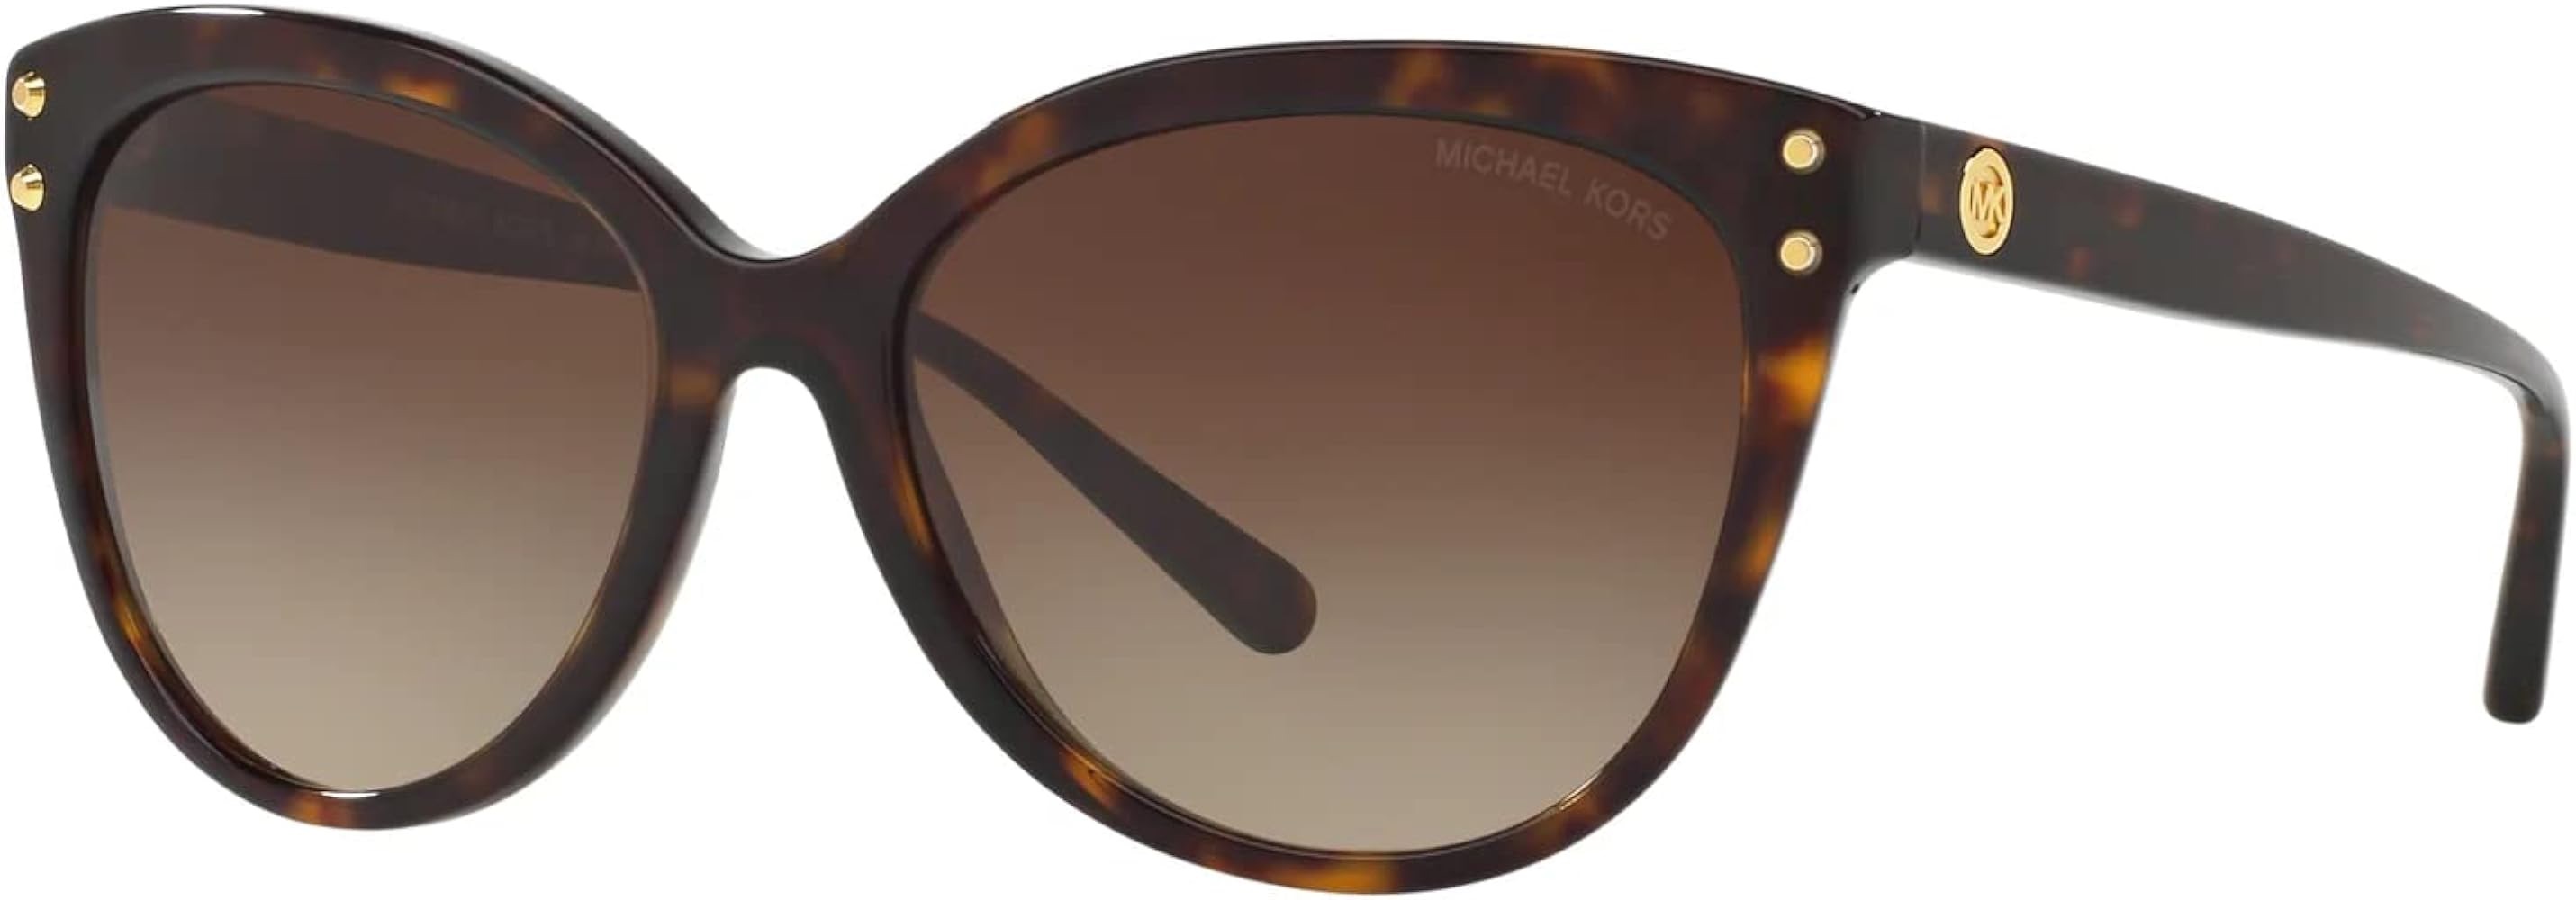 Amazon.com: Michael Kors Jan MK2045 55mm Dark Tortoise Acetate/Brown Gradient One Size sunglasses womens : Clothing, Shoes & Jewelry